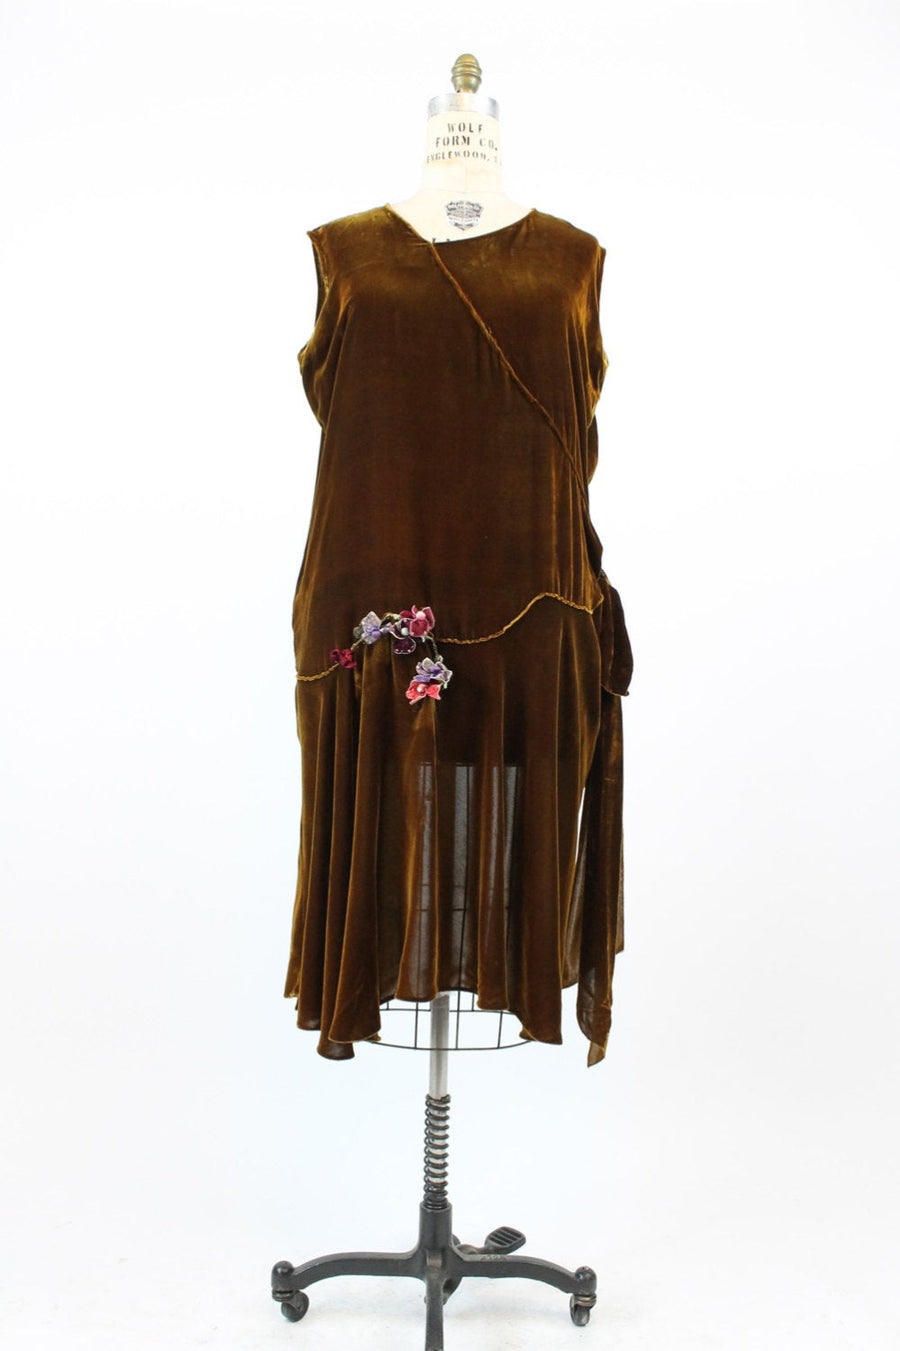 20s Dress Silk Velvet XL Plus / 1920s Vintage Dress Flapper Dropwaist / The Valley Forge Dress